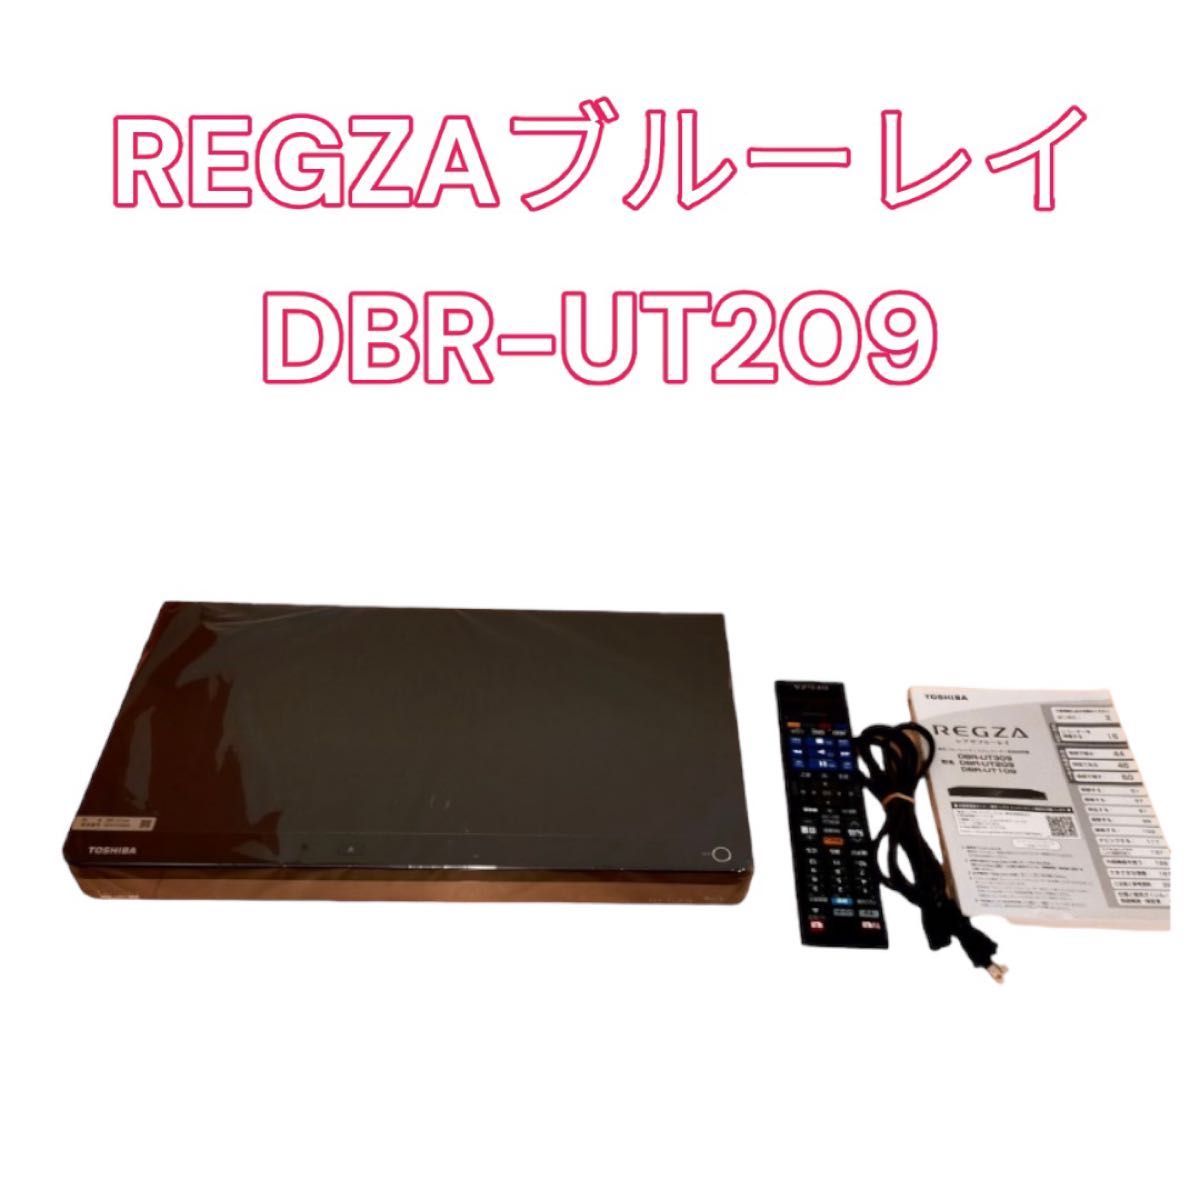 REGZA ブルーレイレコーダー DBR-UT209 2020年製 | JChere雅虎拍卖代购